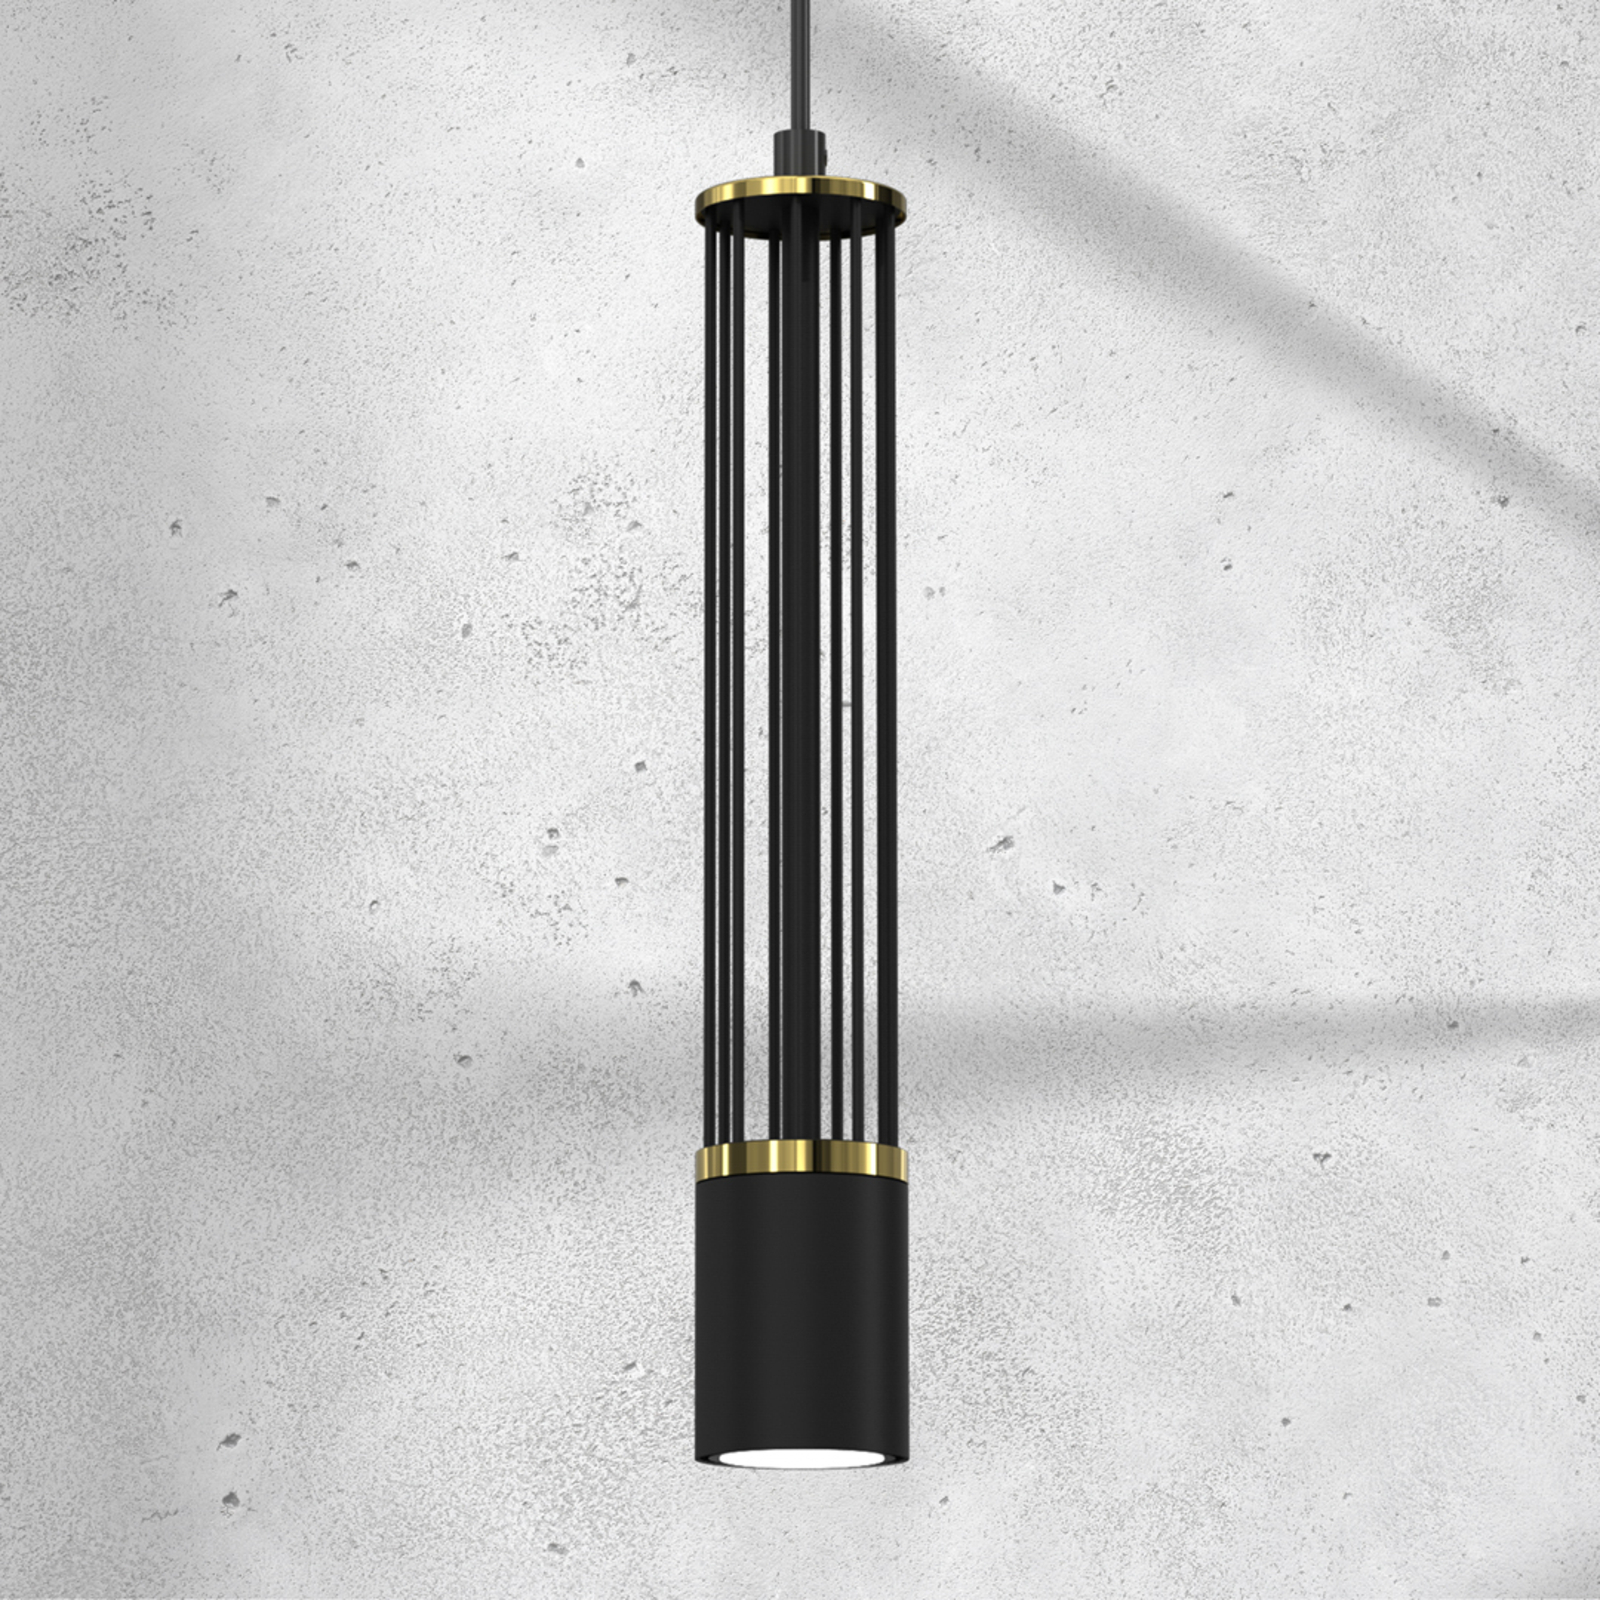 Hanglamp Estilo, zwart, 1-lamp